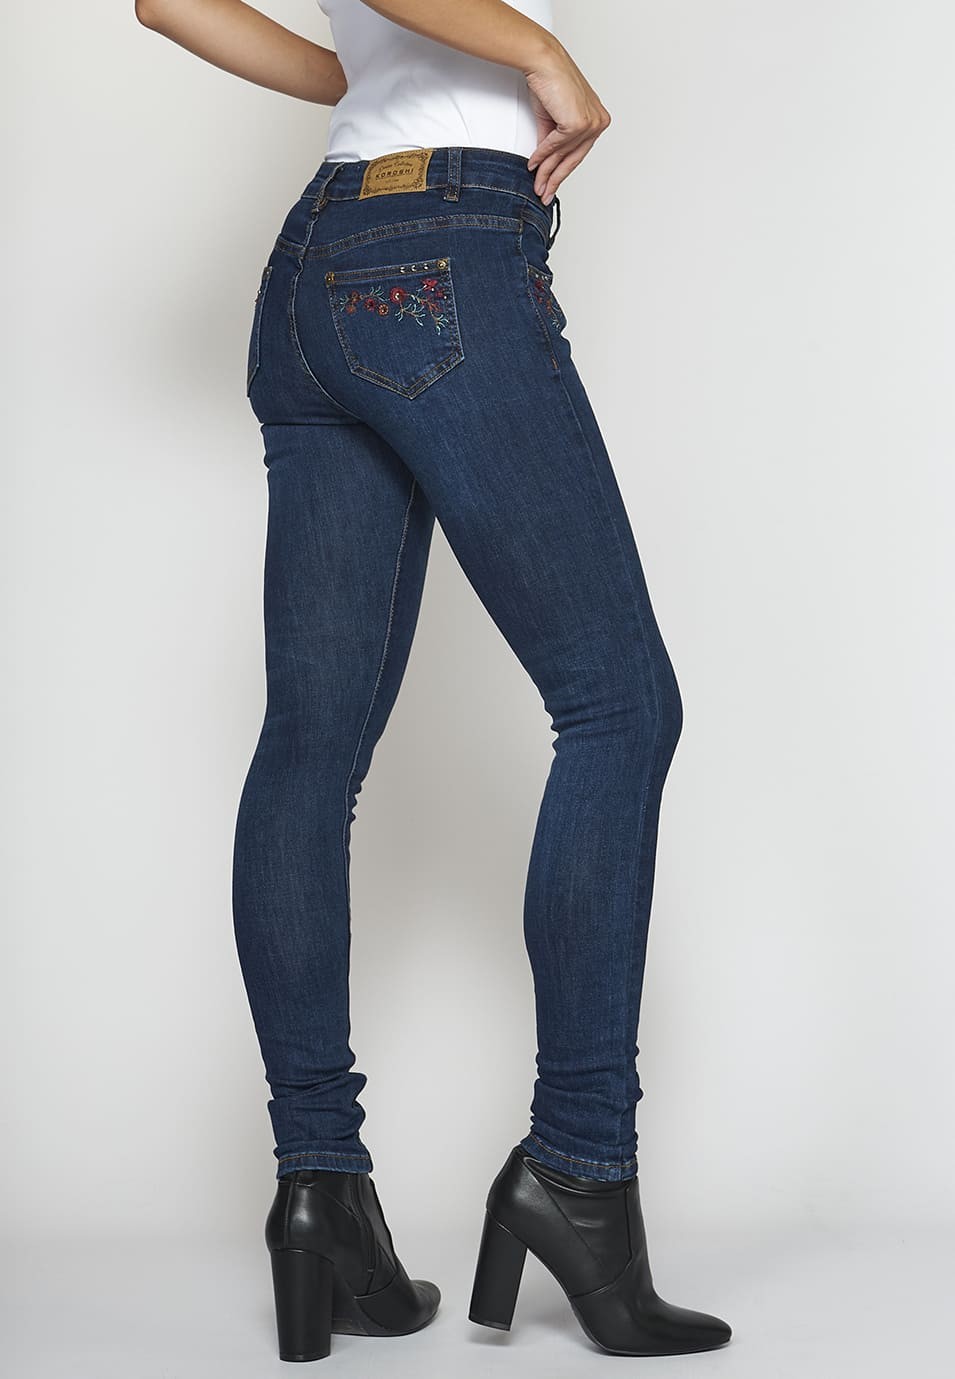 Pantalones jeans con bordados para mujer